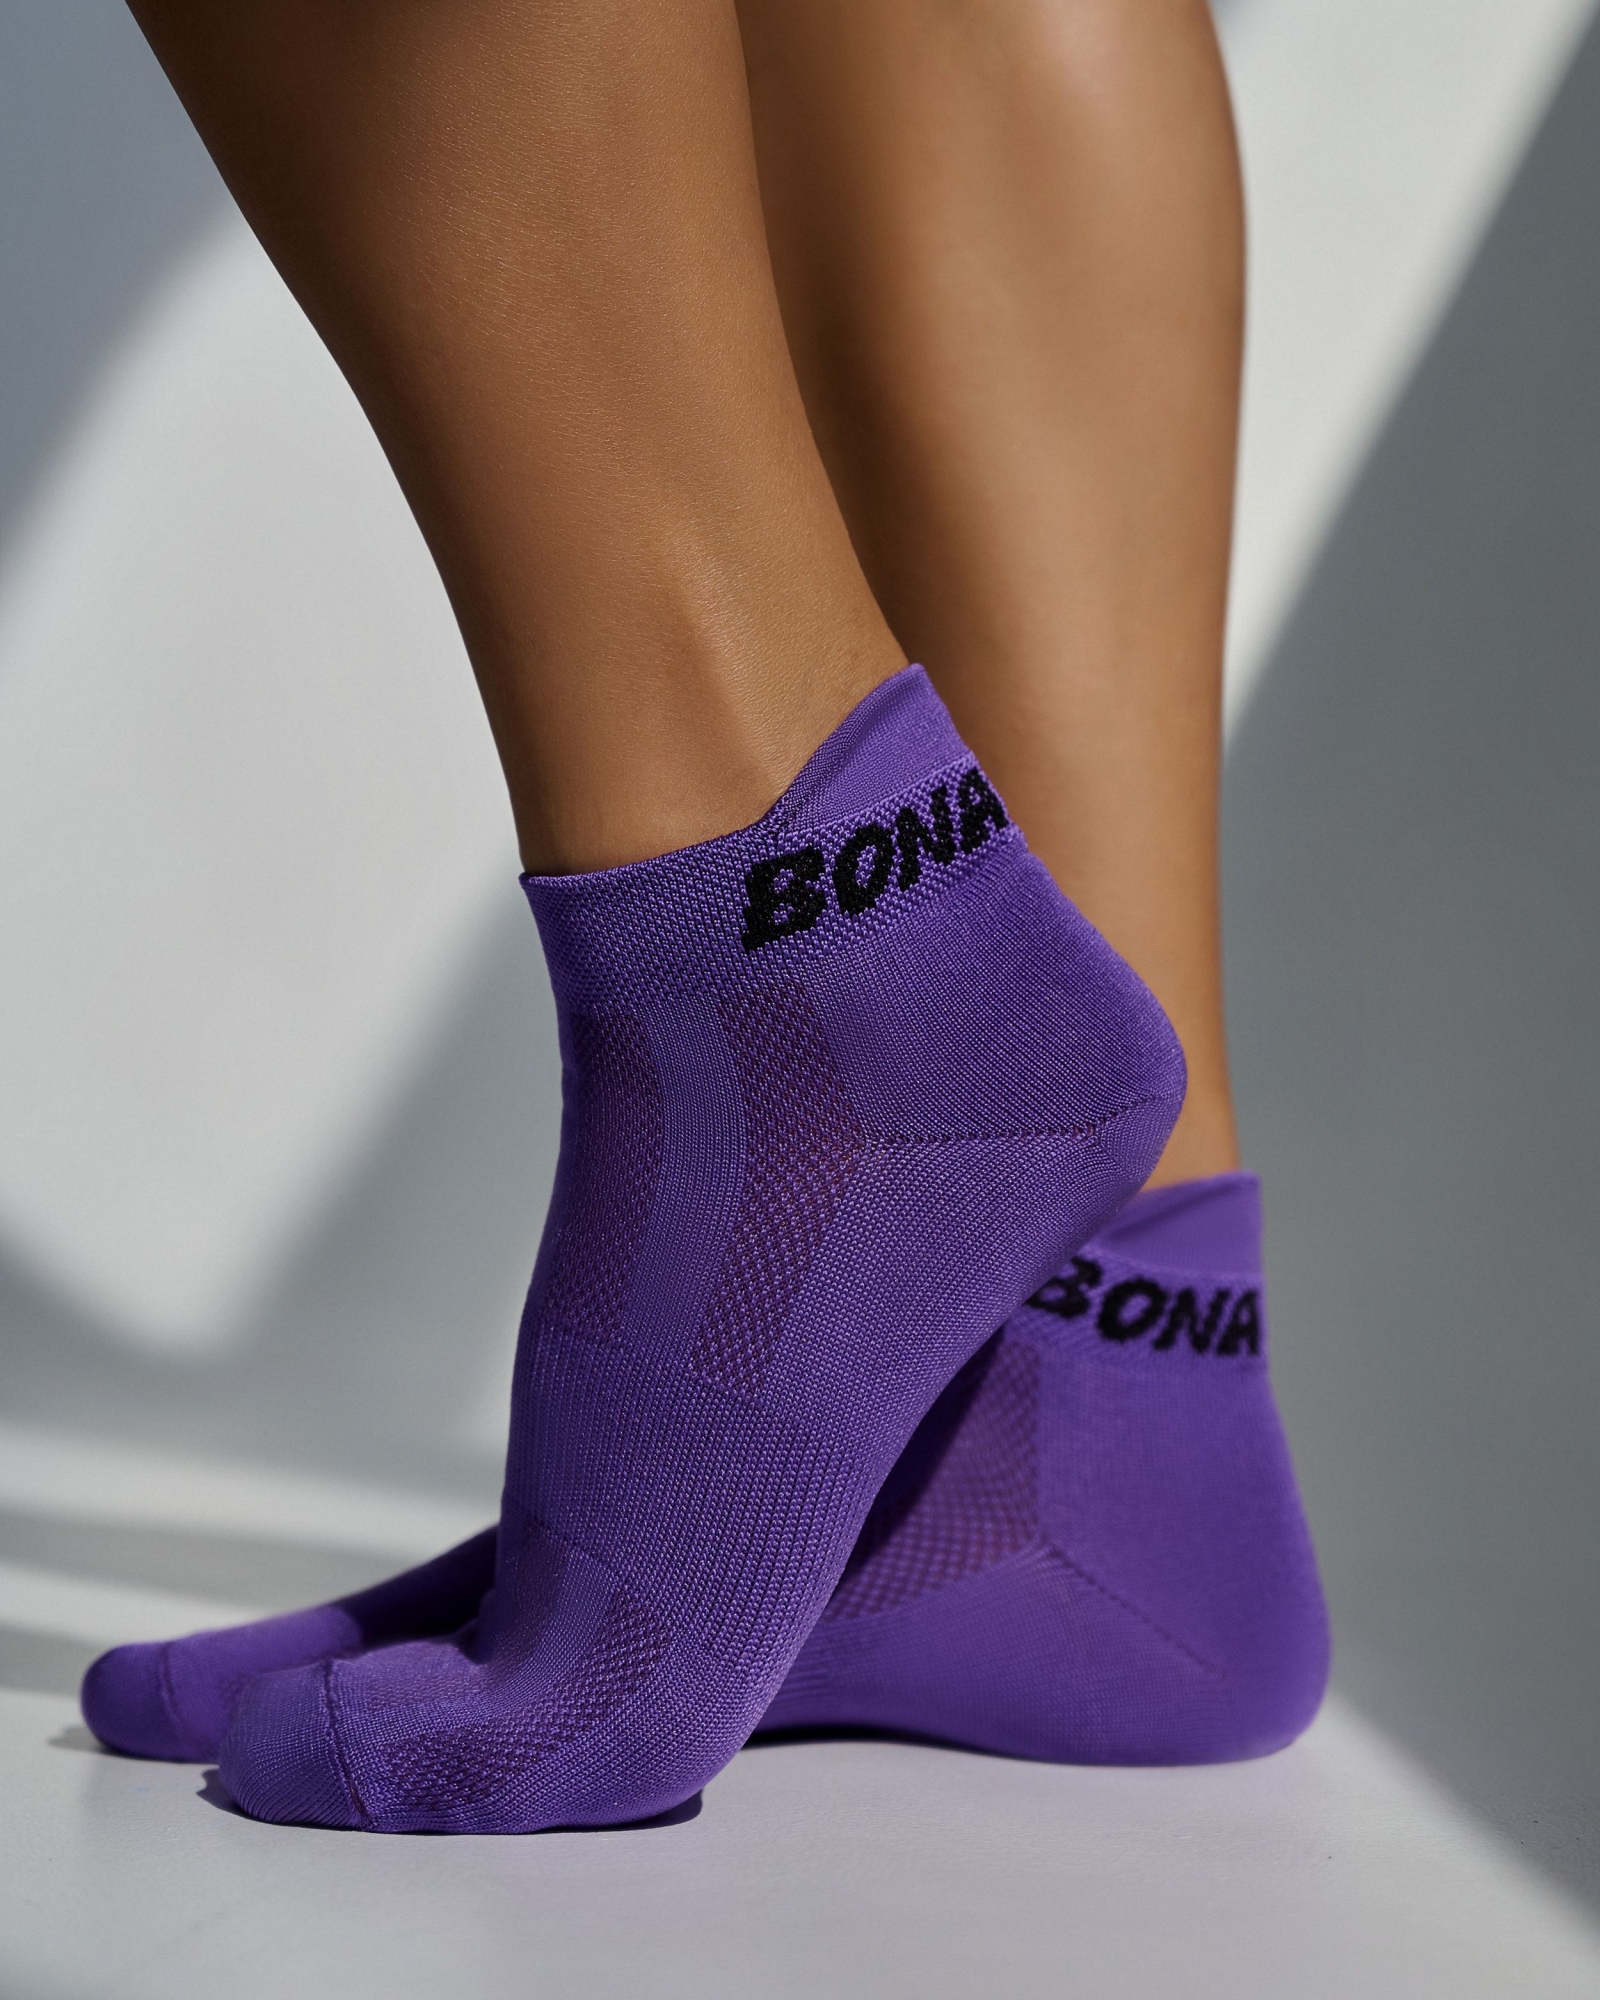 Bona Fide: Color Set of Socks(3 пары) фото 5